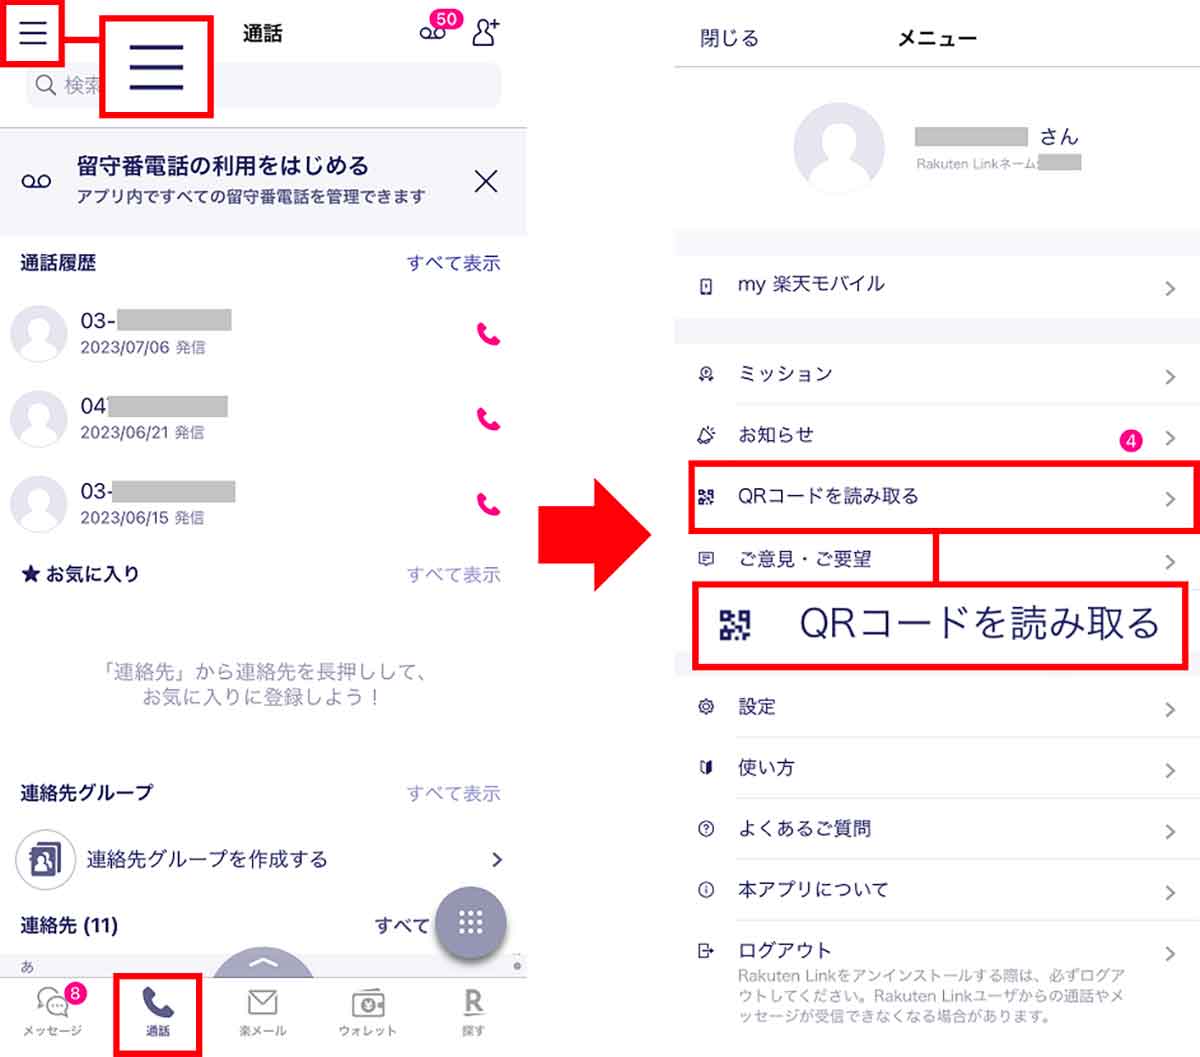 Rakuten Link デスクトップ版アプリの利用方法6